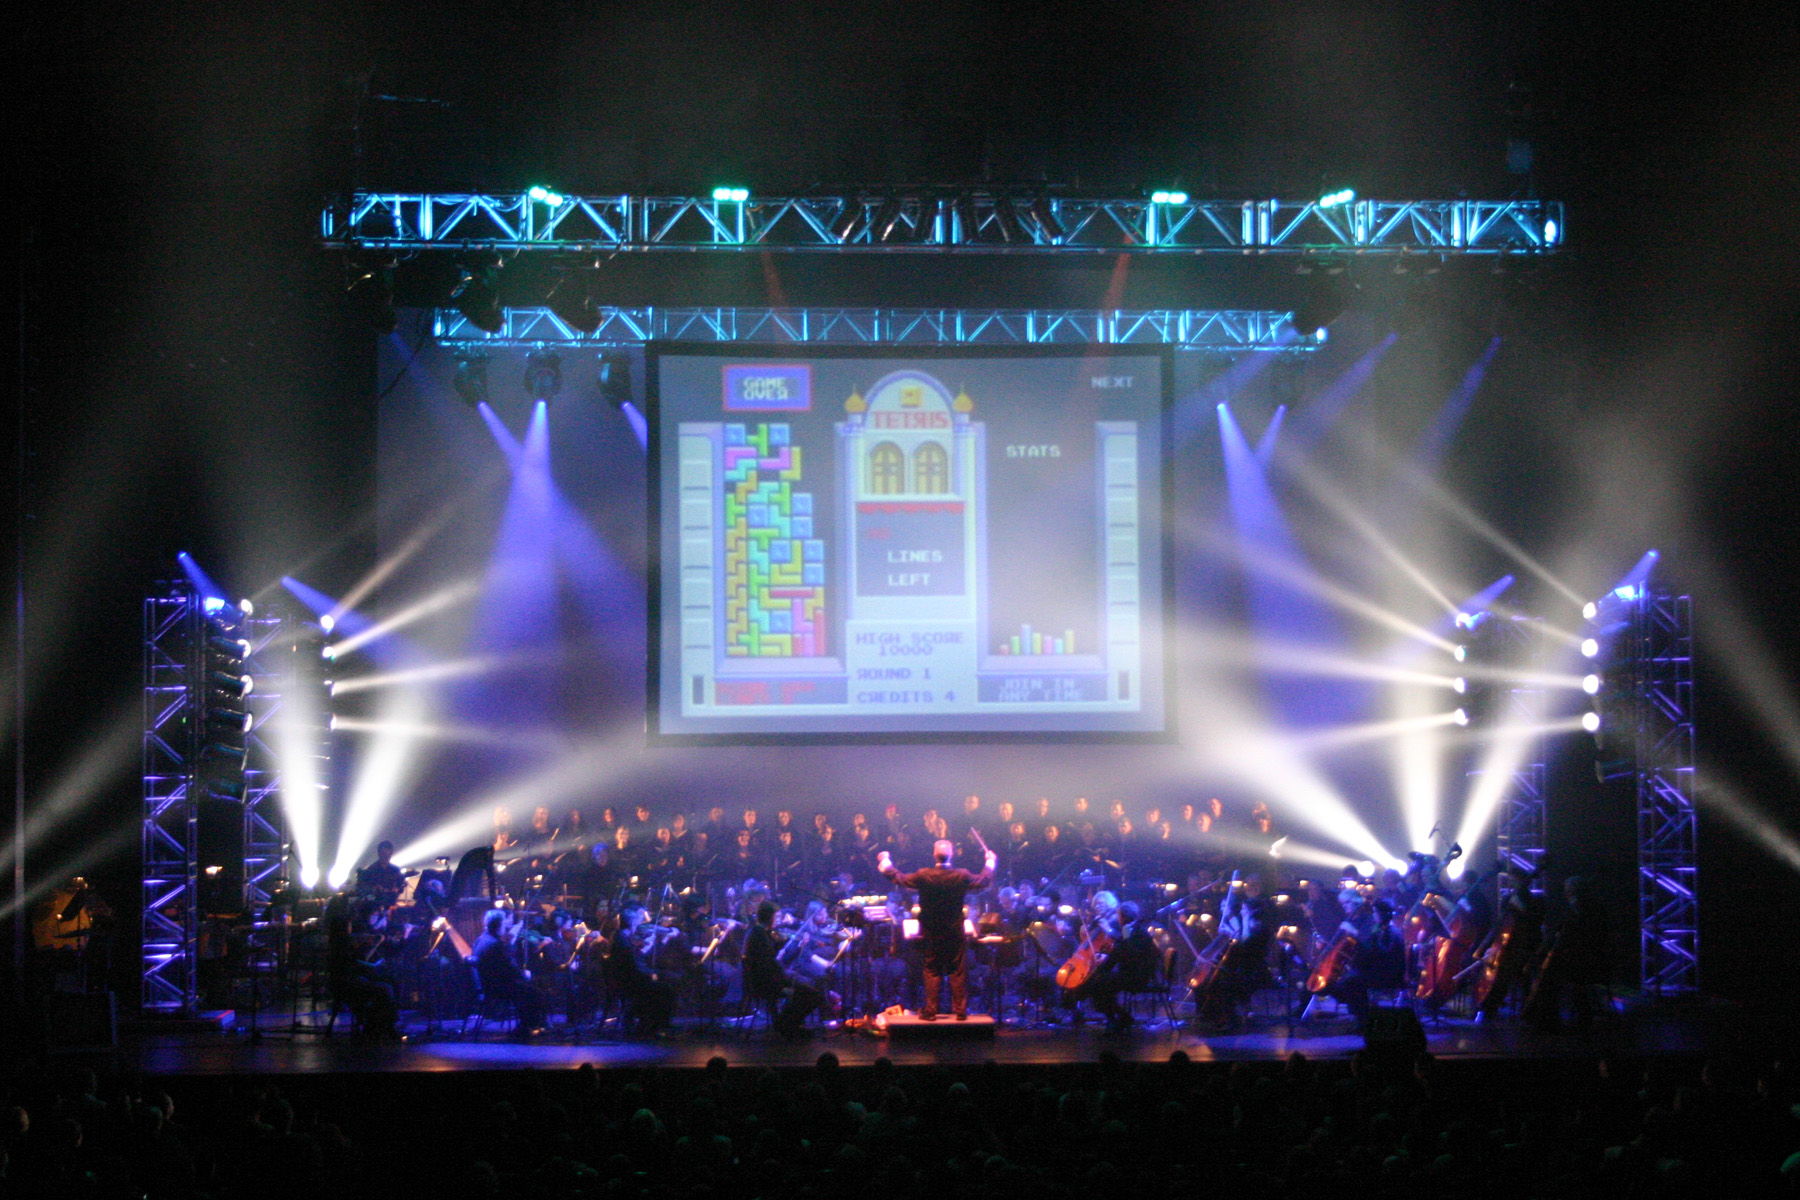 video game concert tour